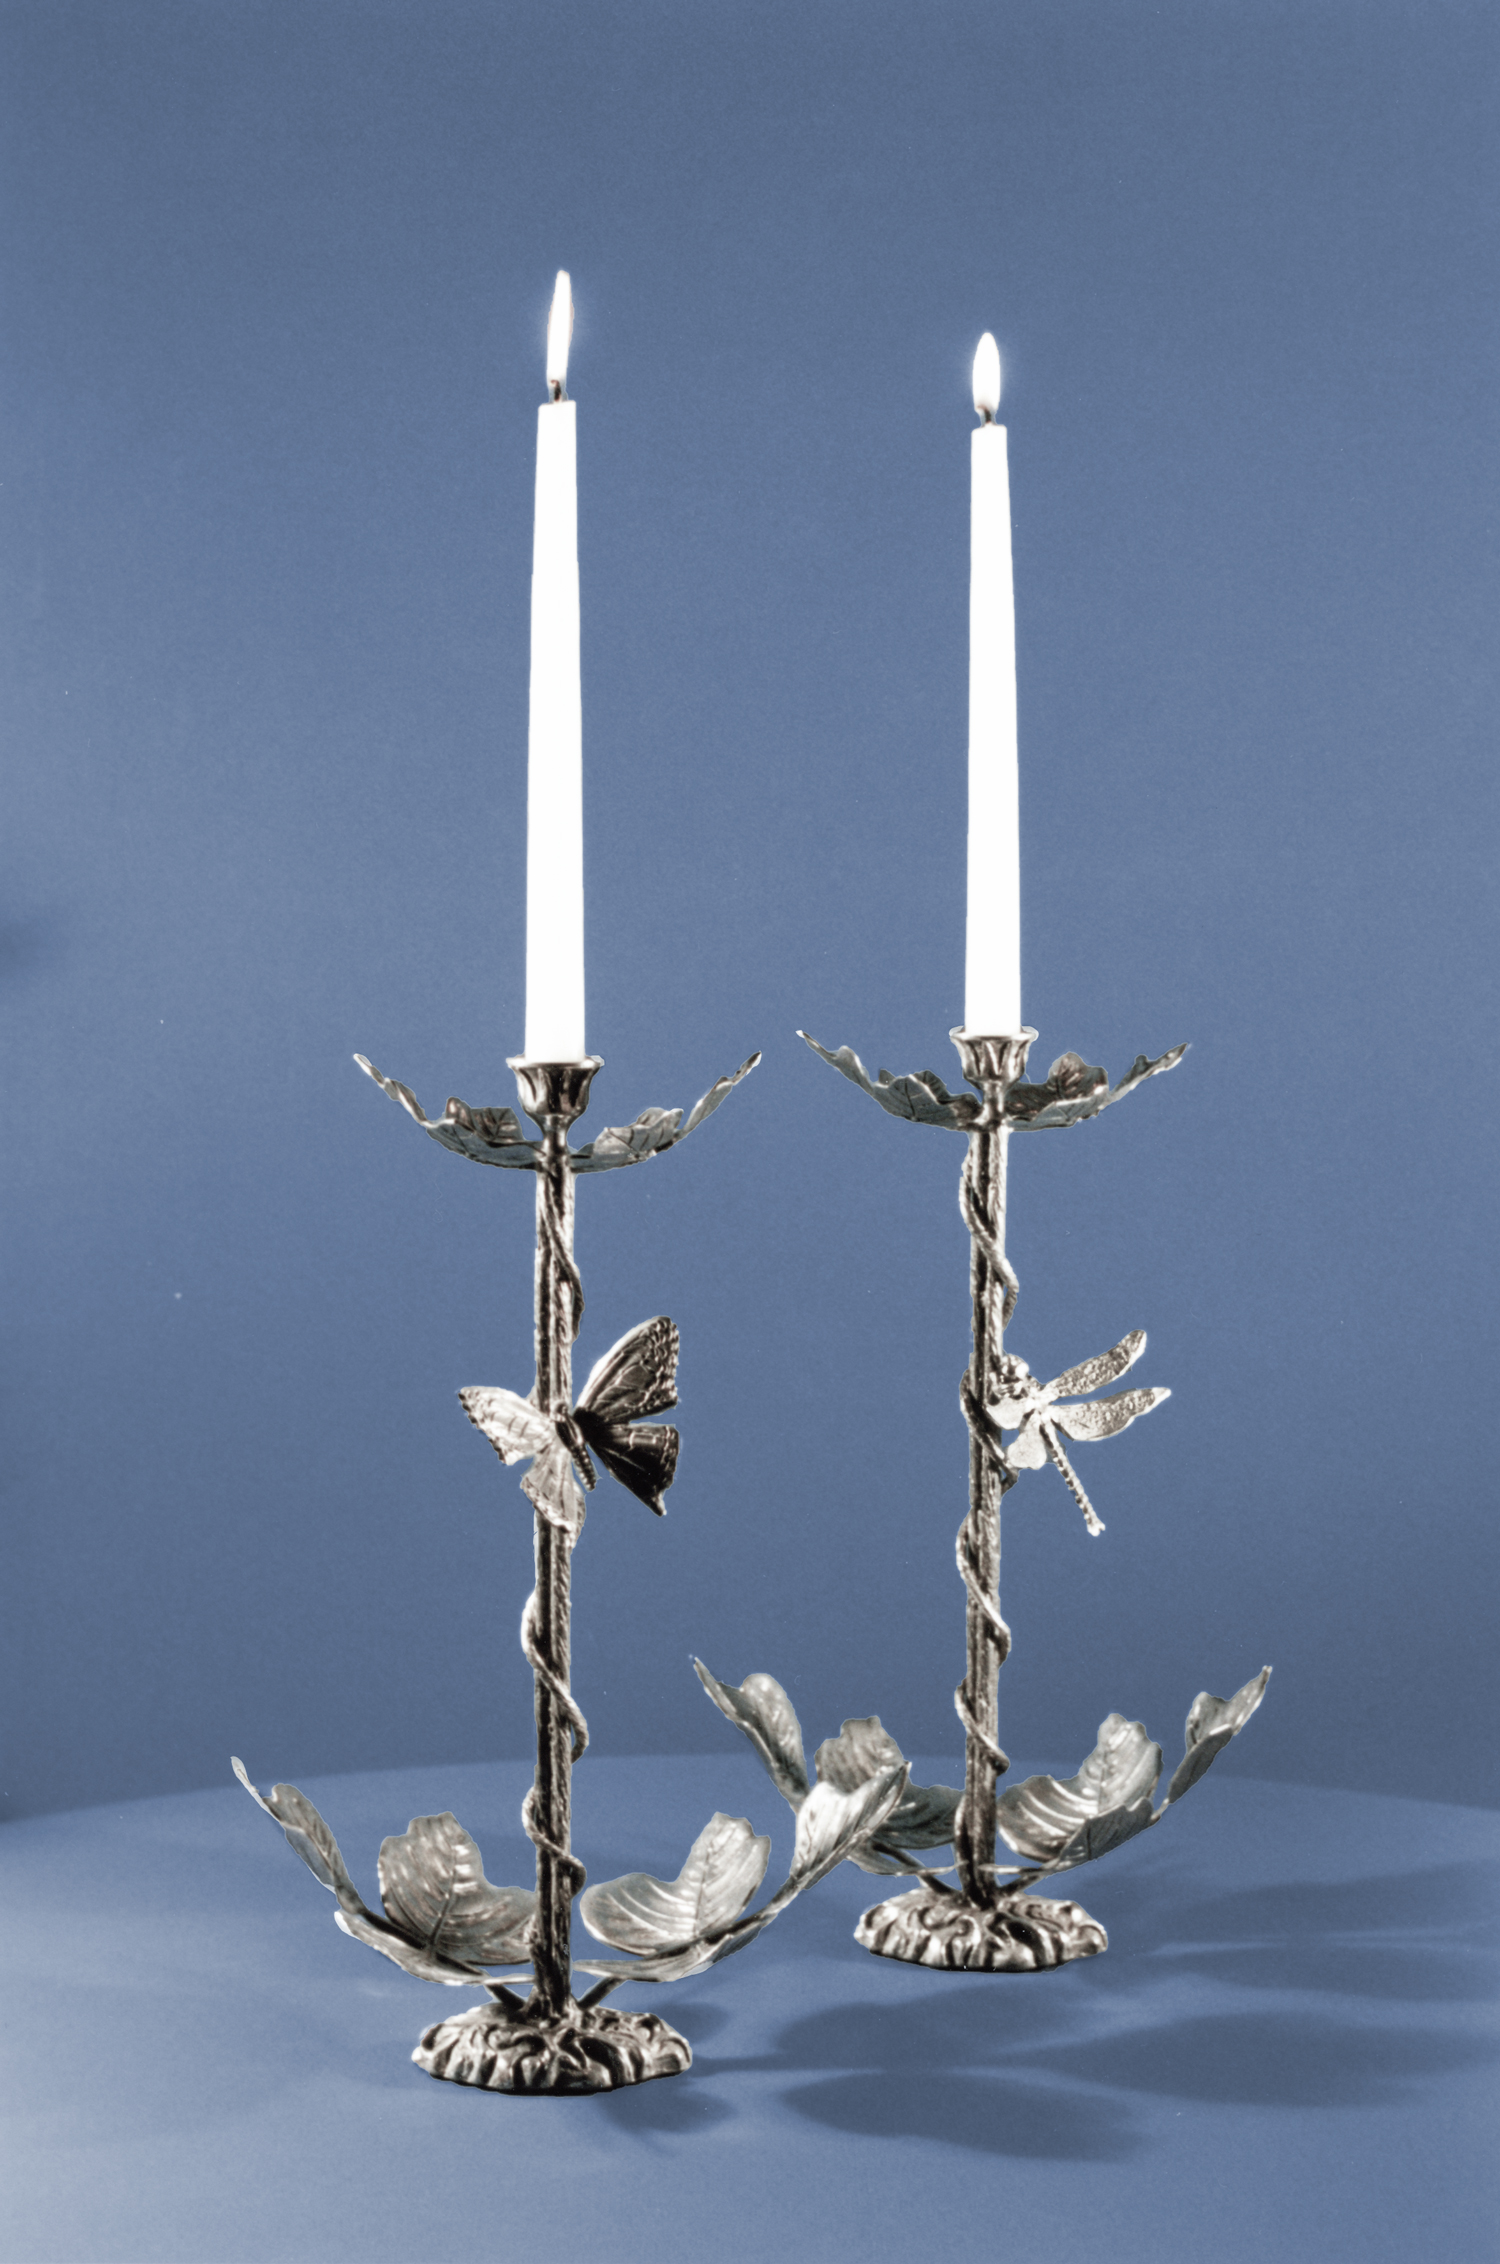 Tall Twisted Kudzu Candle Holders by Charles H. Reinike III